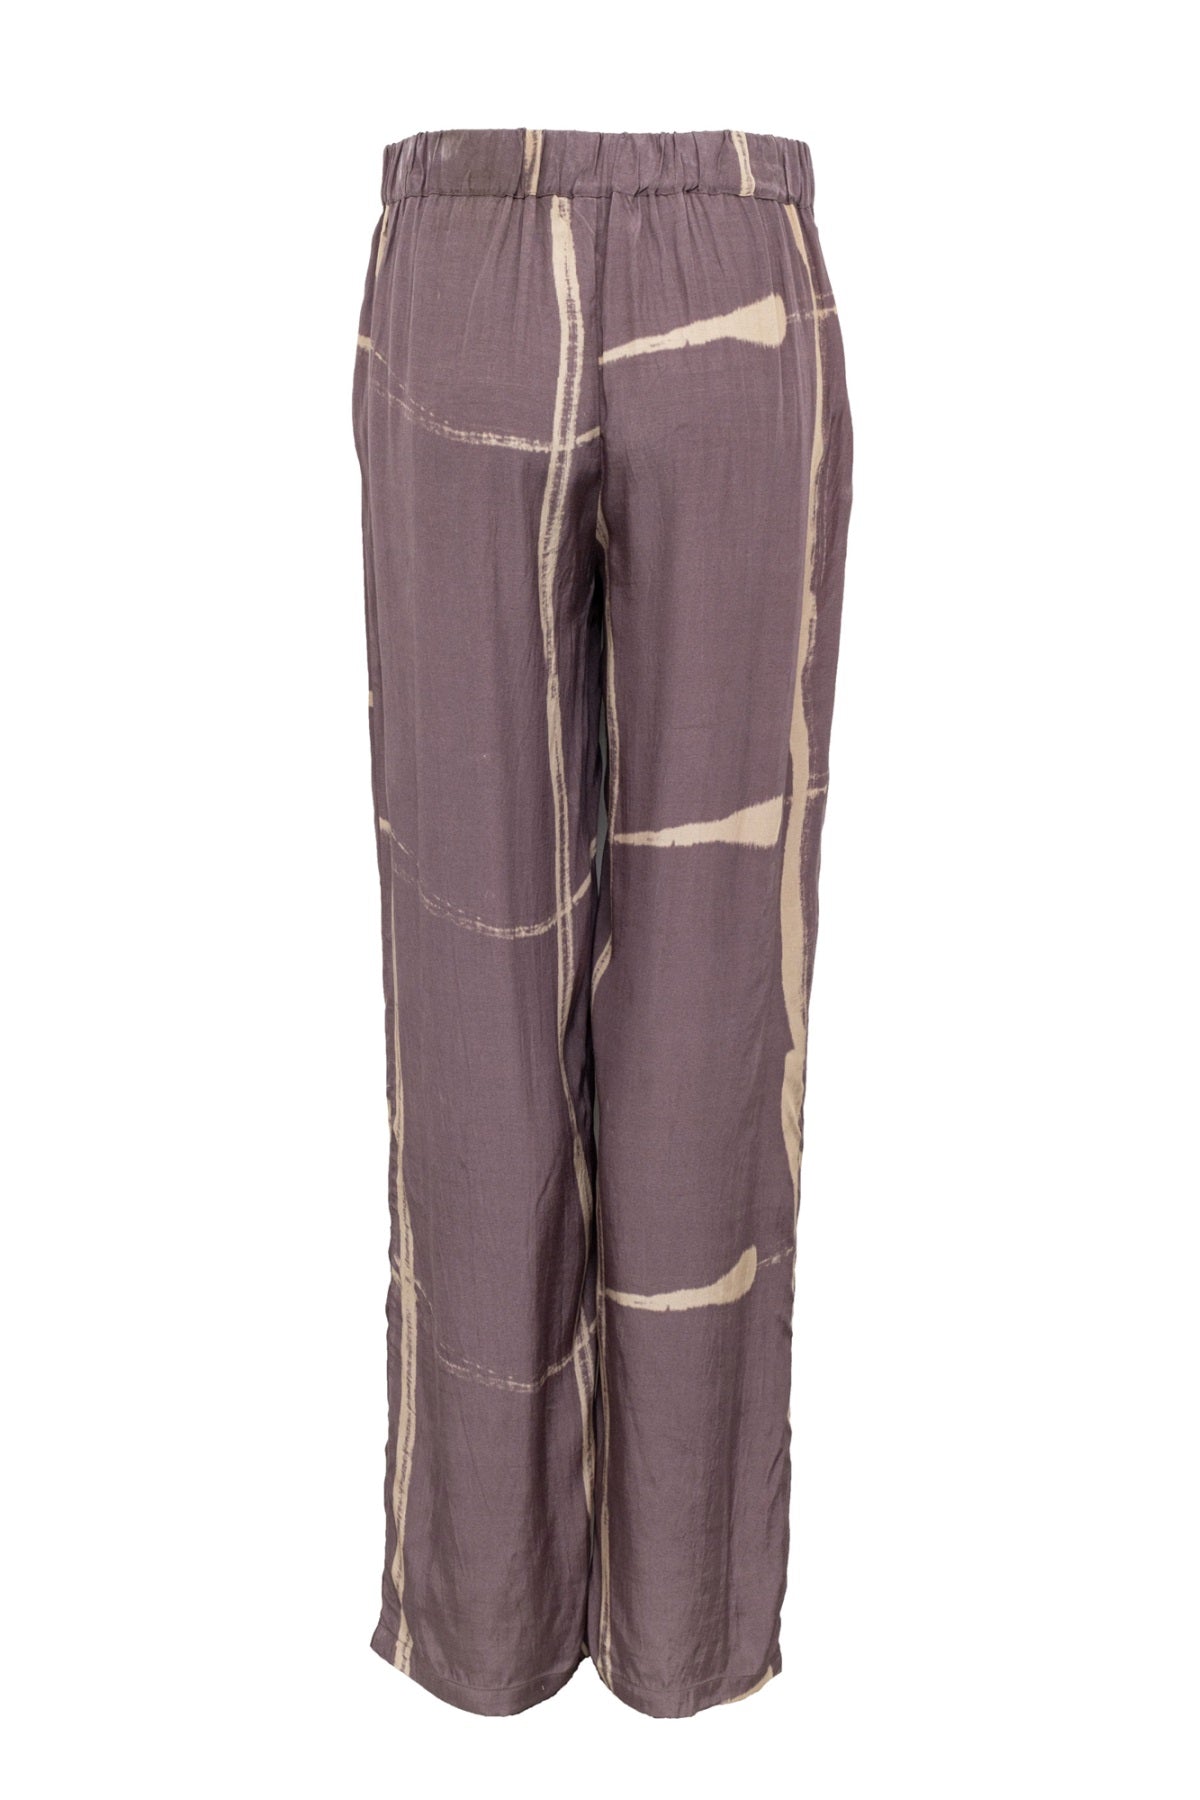 Costamani Dahlia Pants, Tie Dye Purple